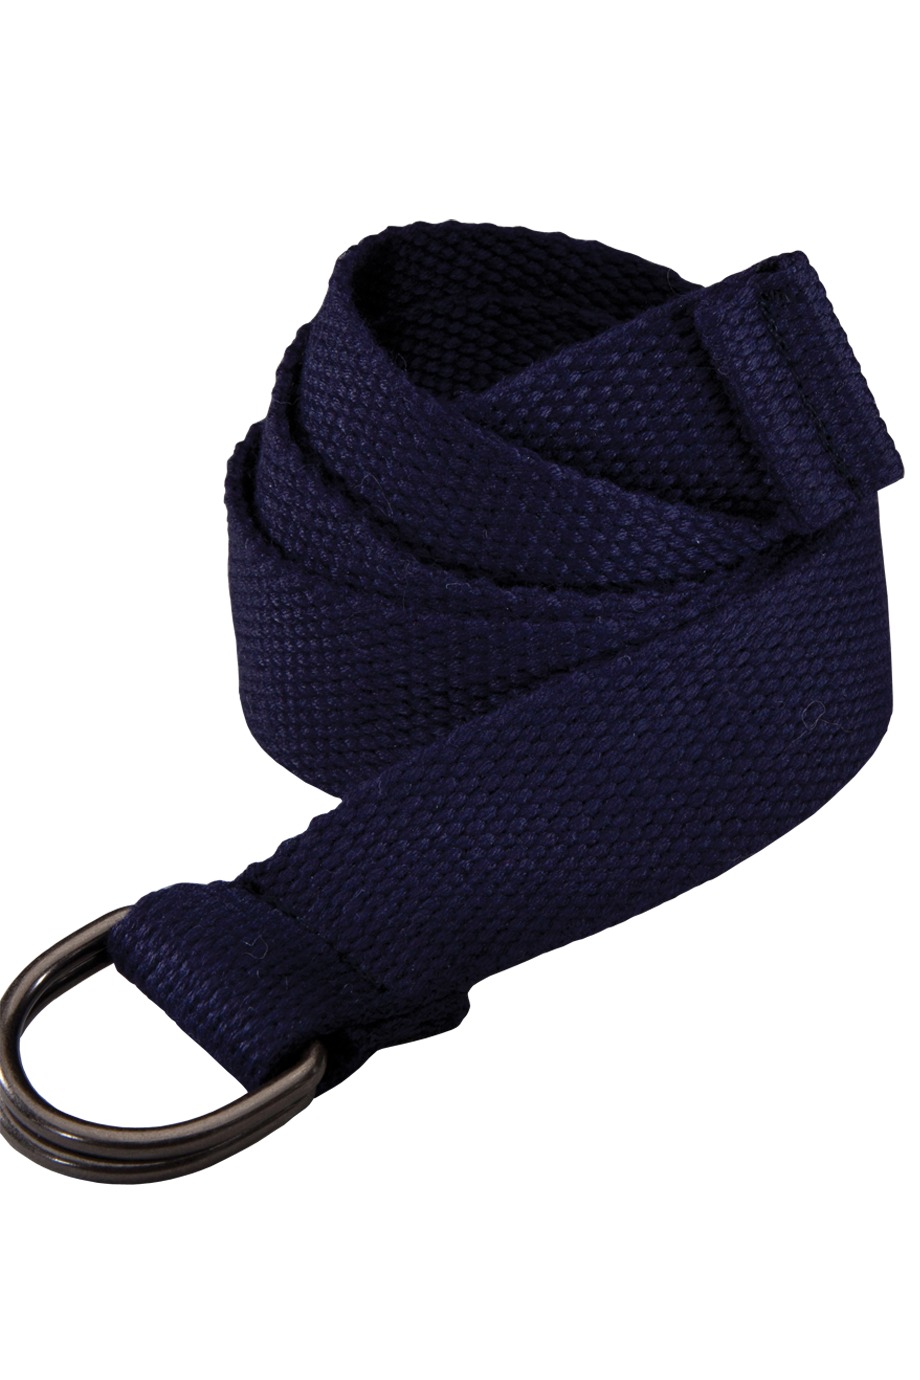 Edwards Garment WD00 - D-Ring Web Belt